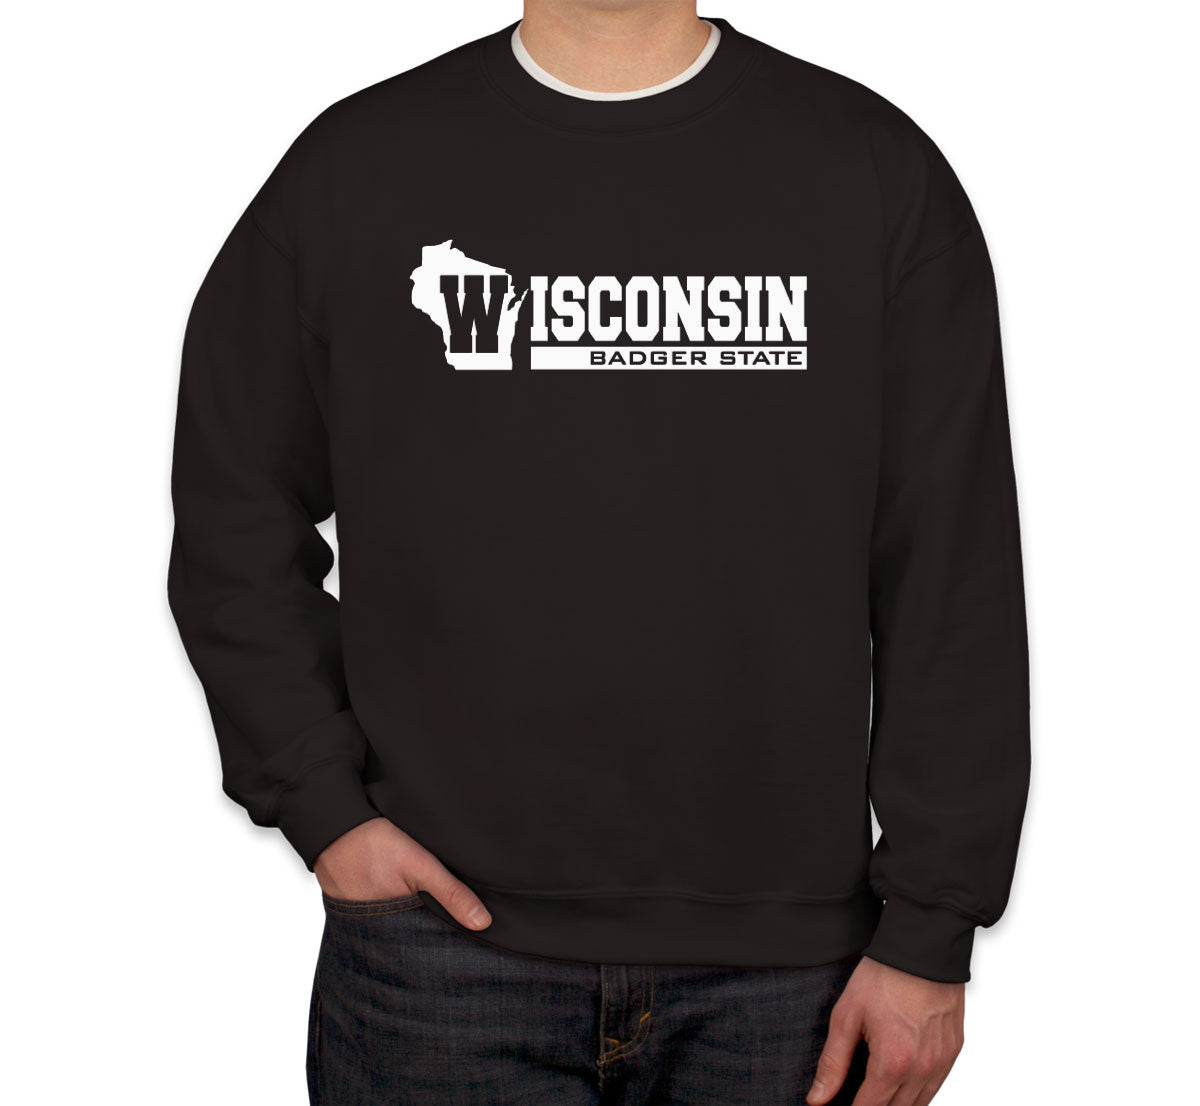 Wisconsin Badger State Unisex Sweatshirt